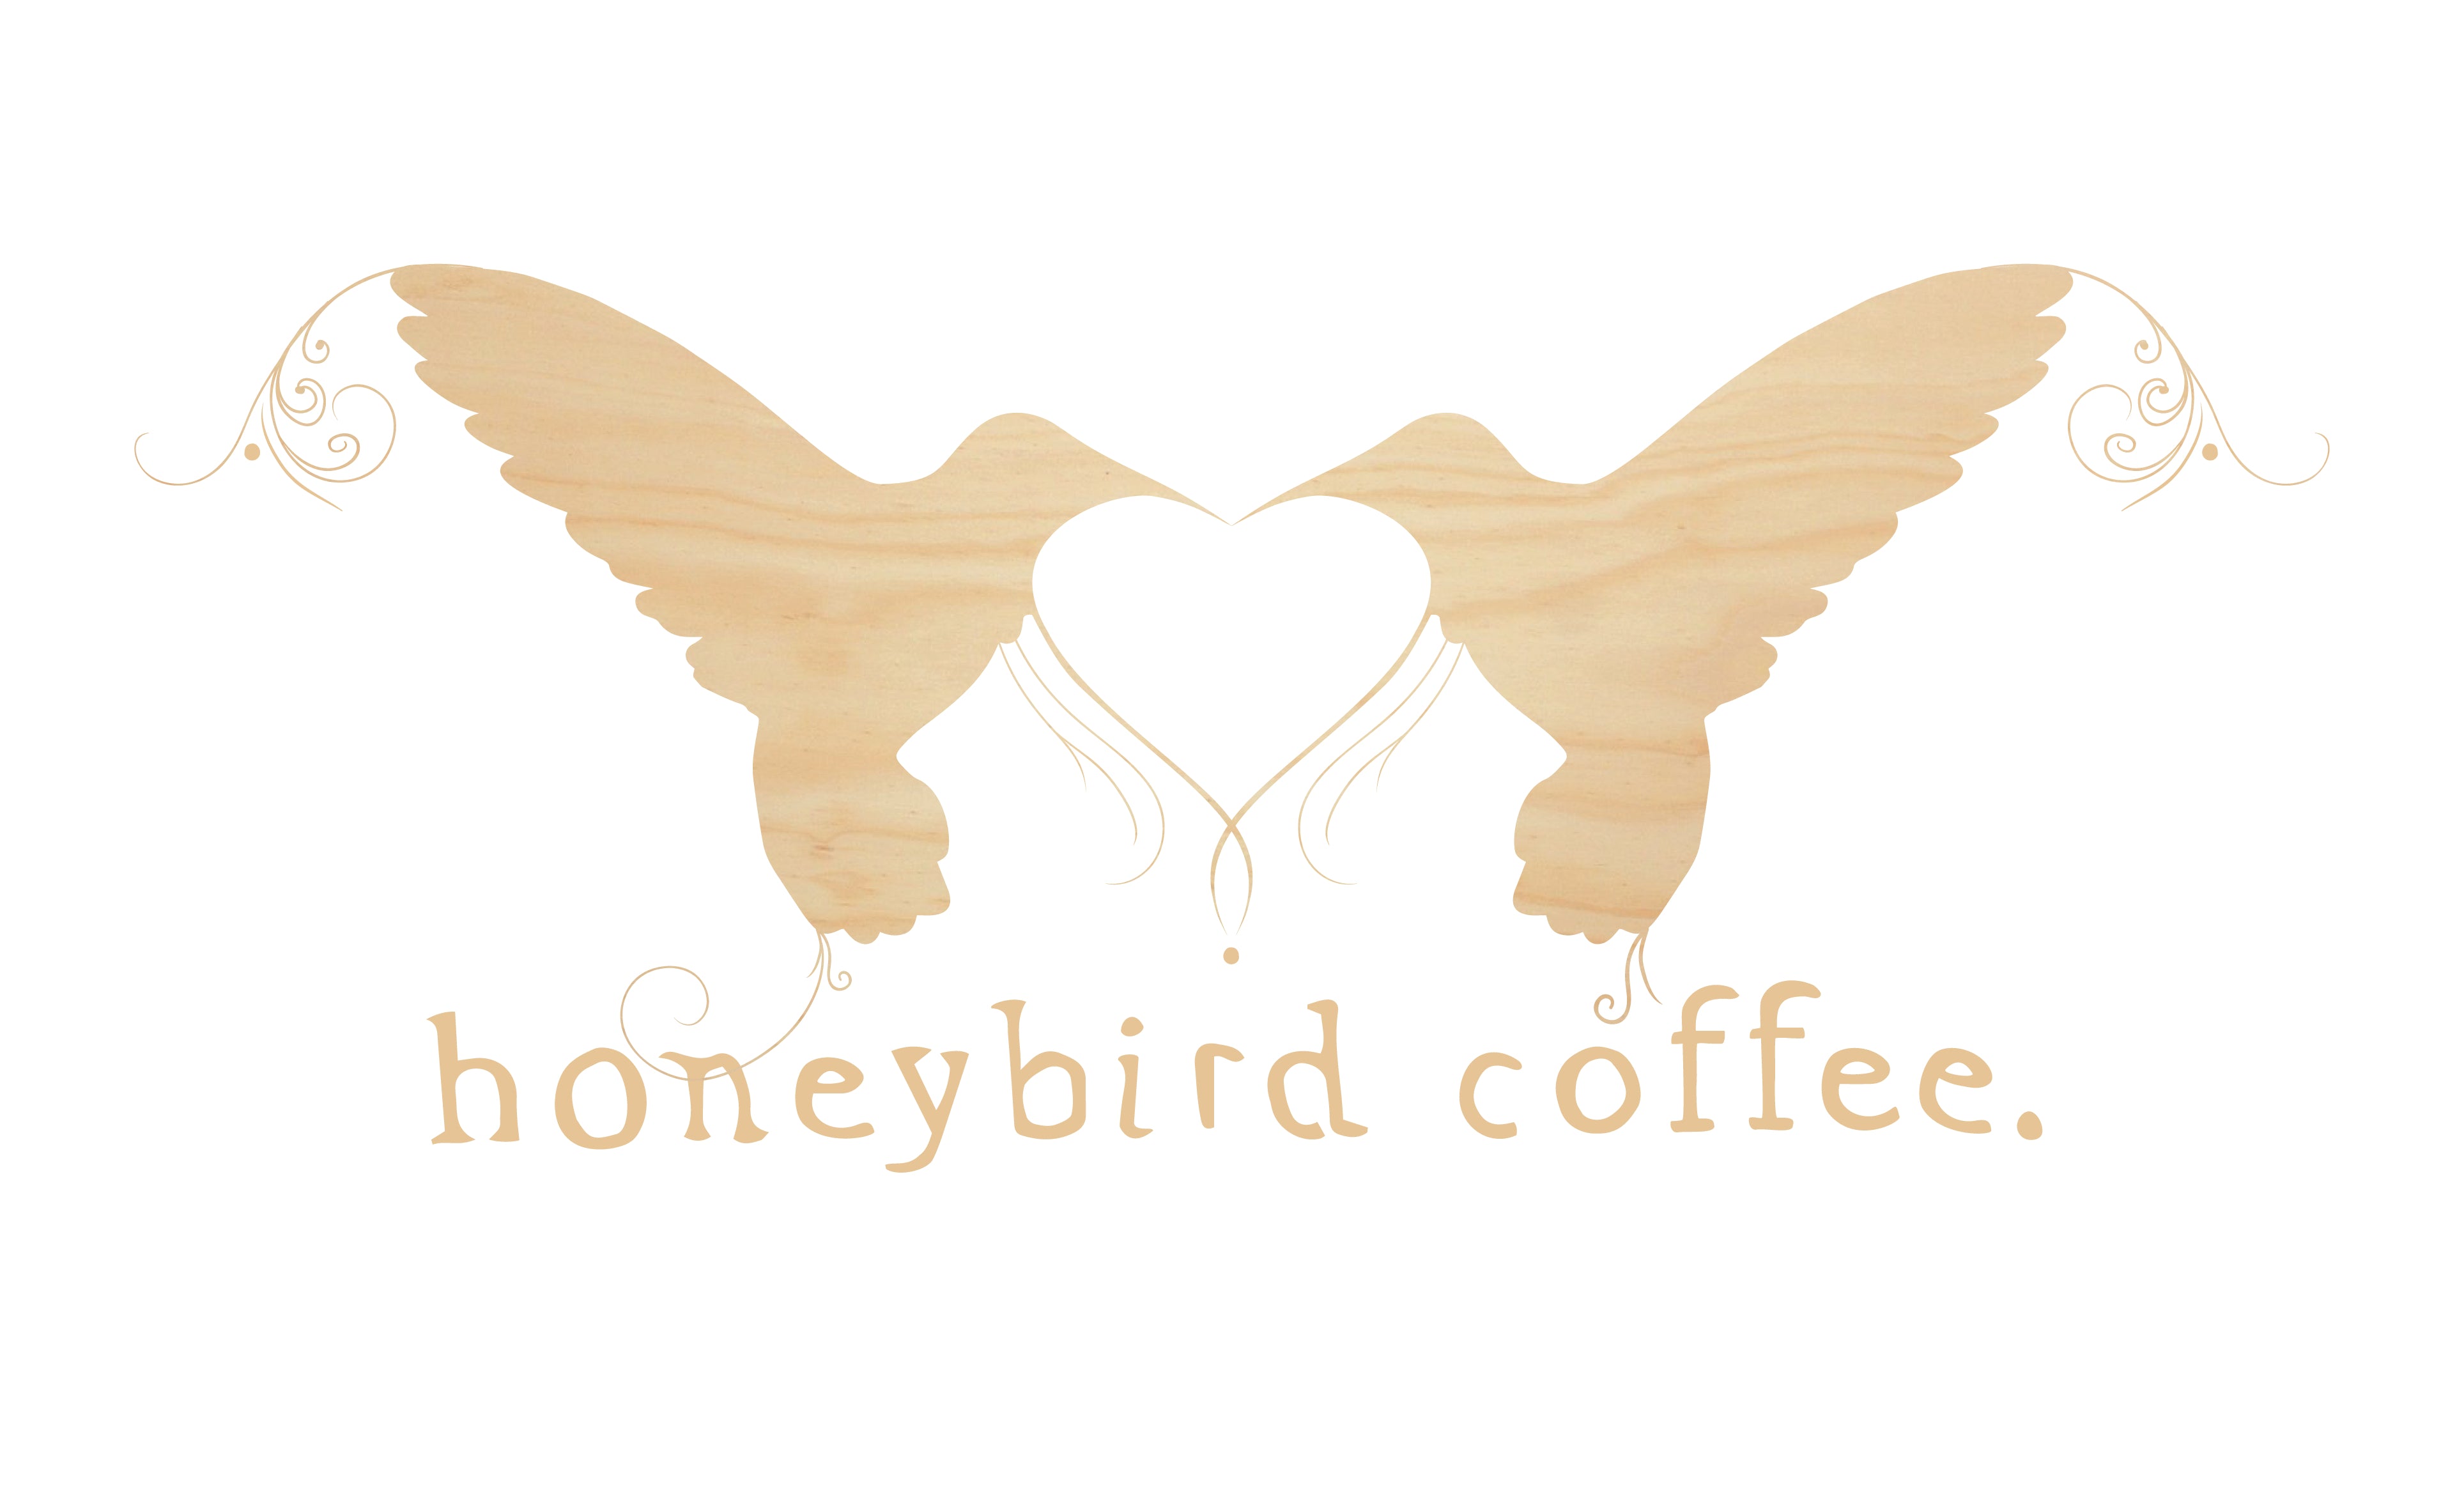 Honeybird coffee